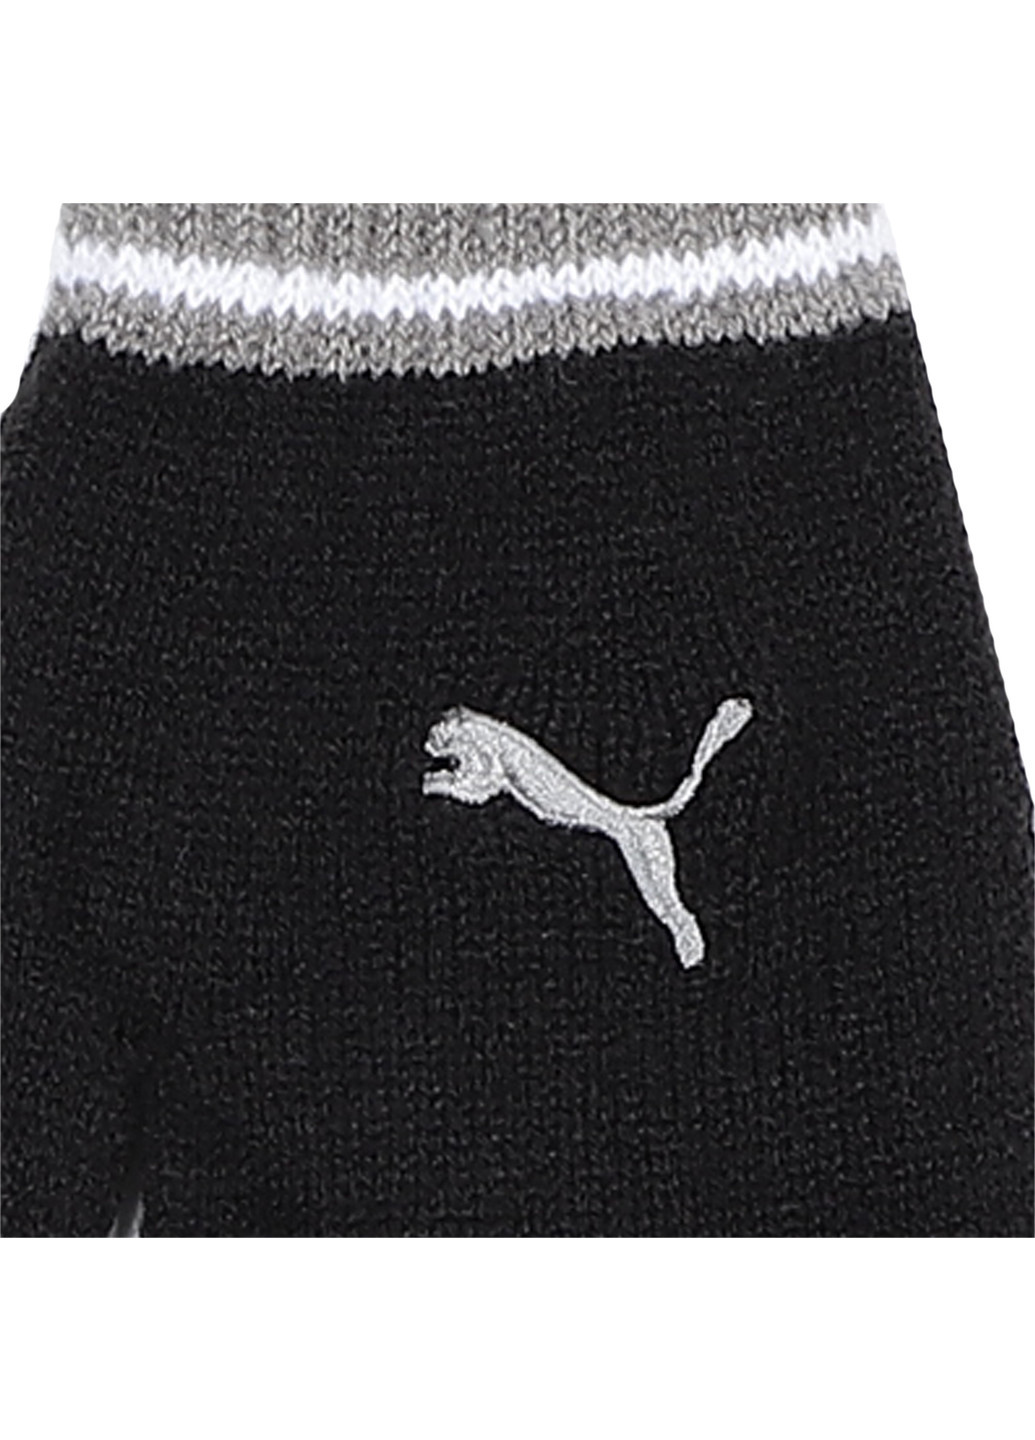 Перчатки Puma knit gloves (211983696)